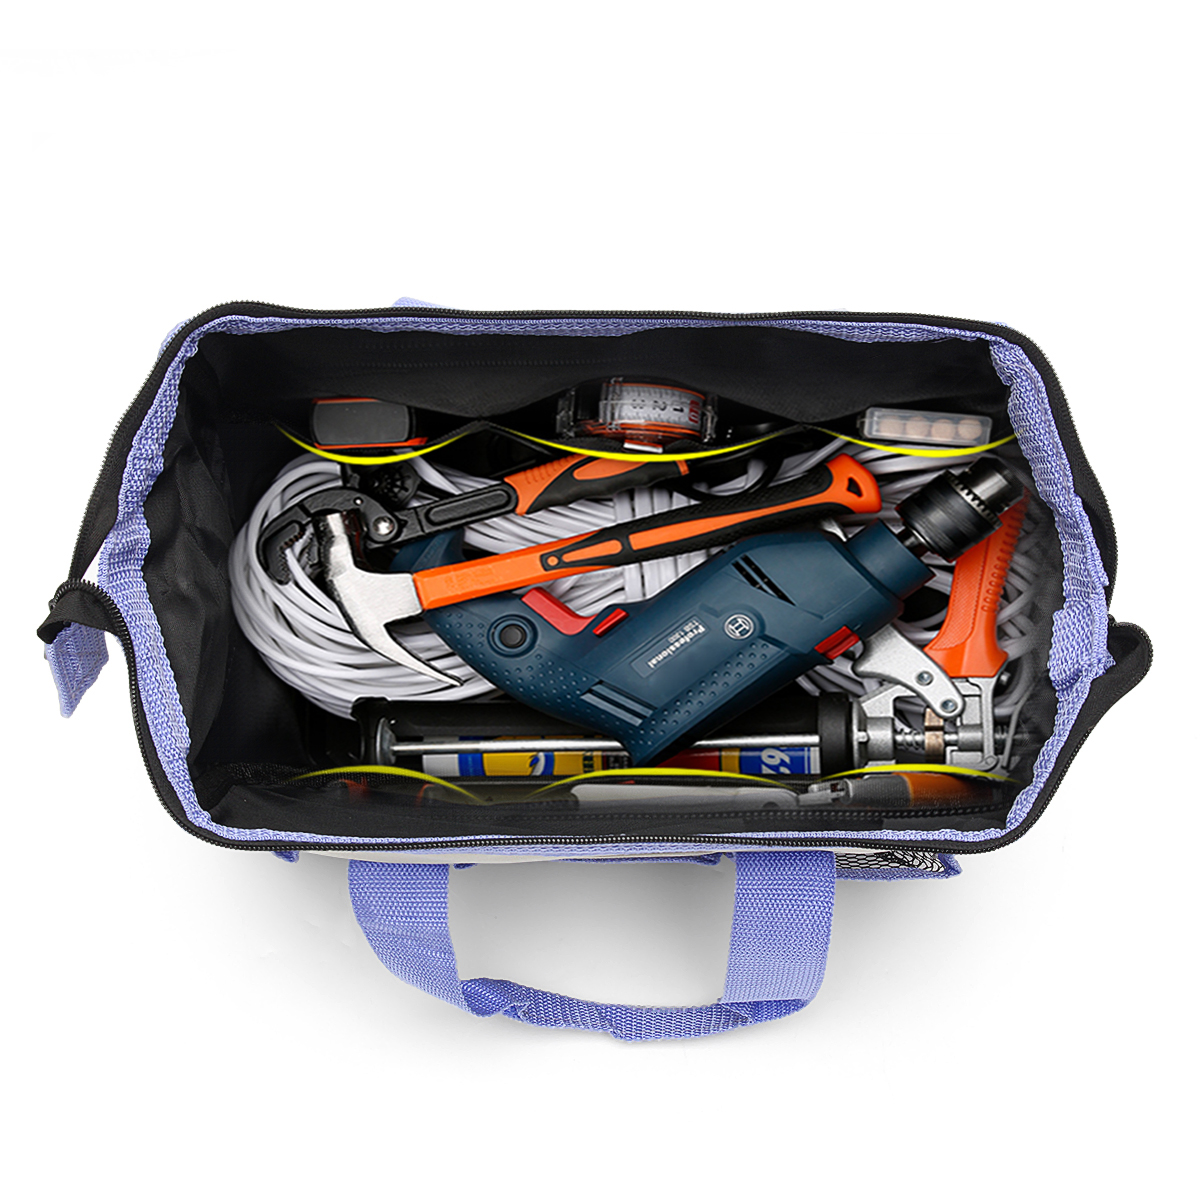 Multifunction-Repair-Tool-Bag-Canvas-Fabric-Electrician-Pocket-Storage-Case-Bag-1347101-3